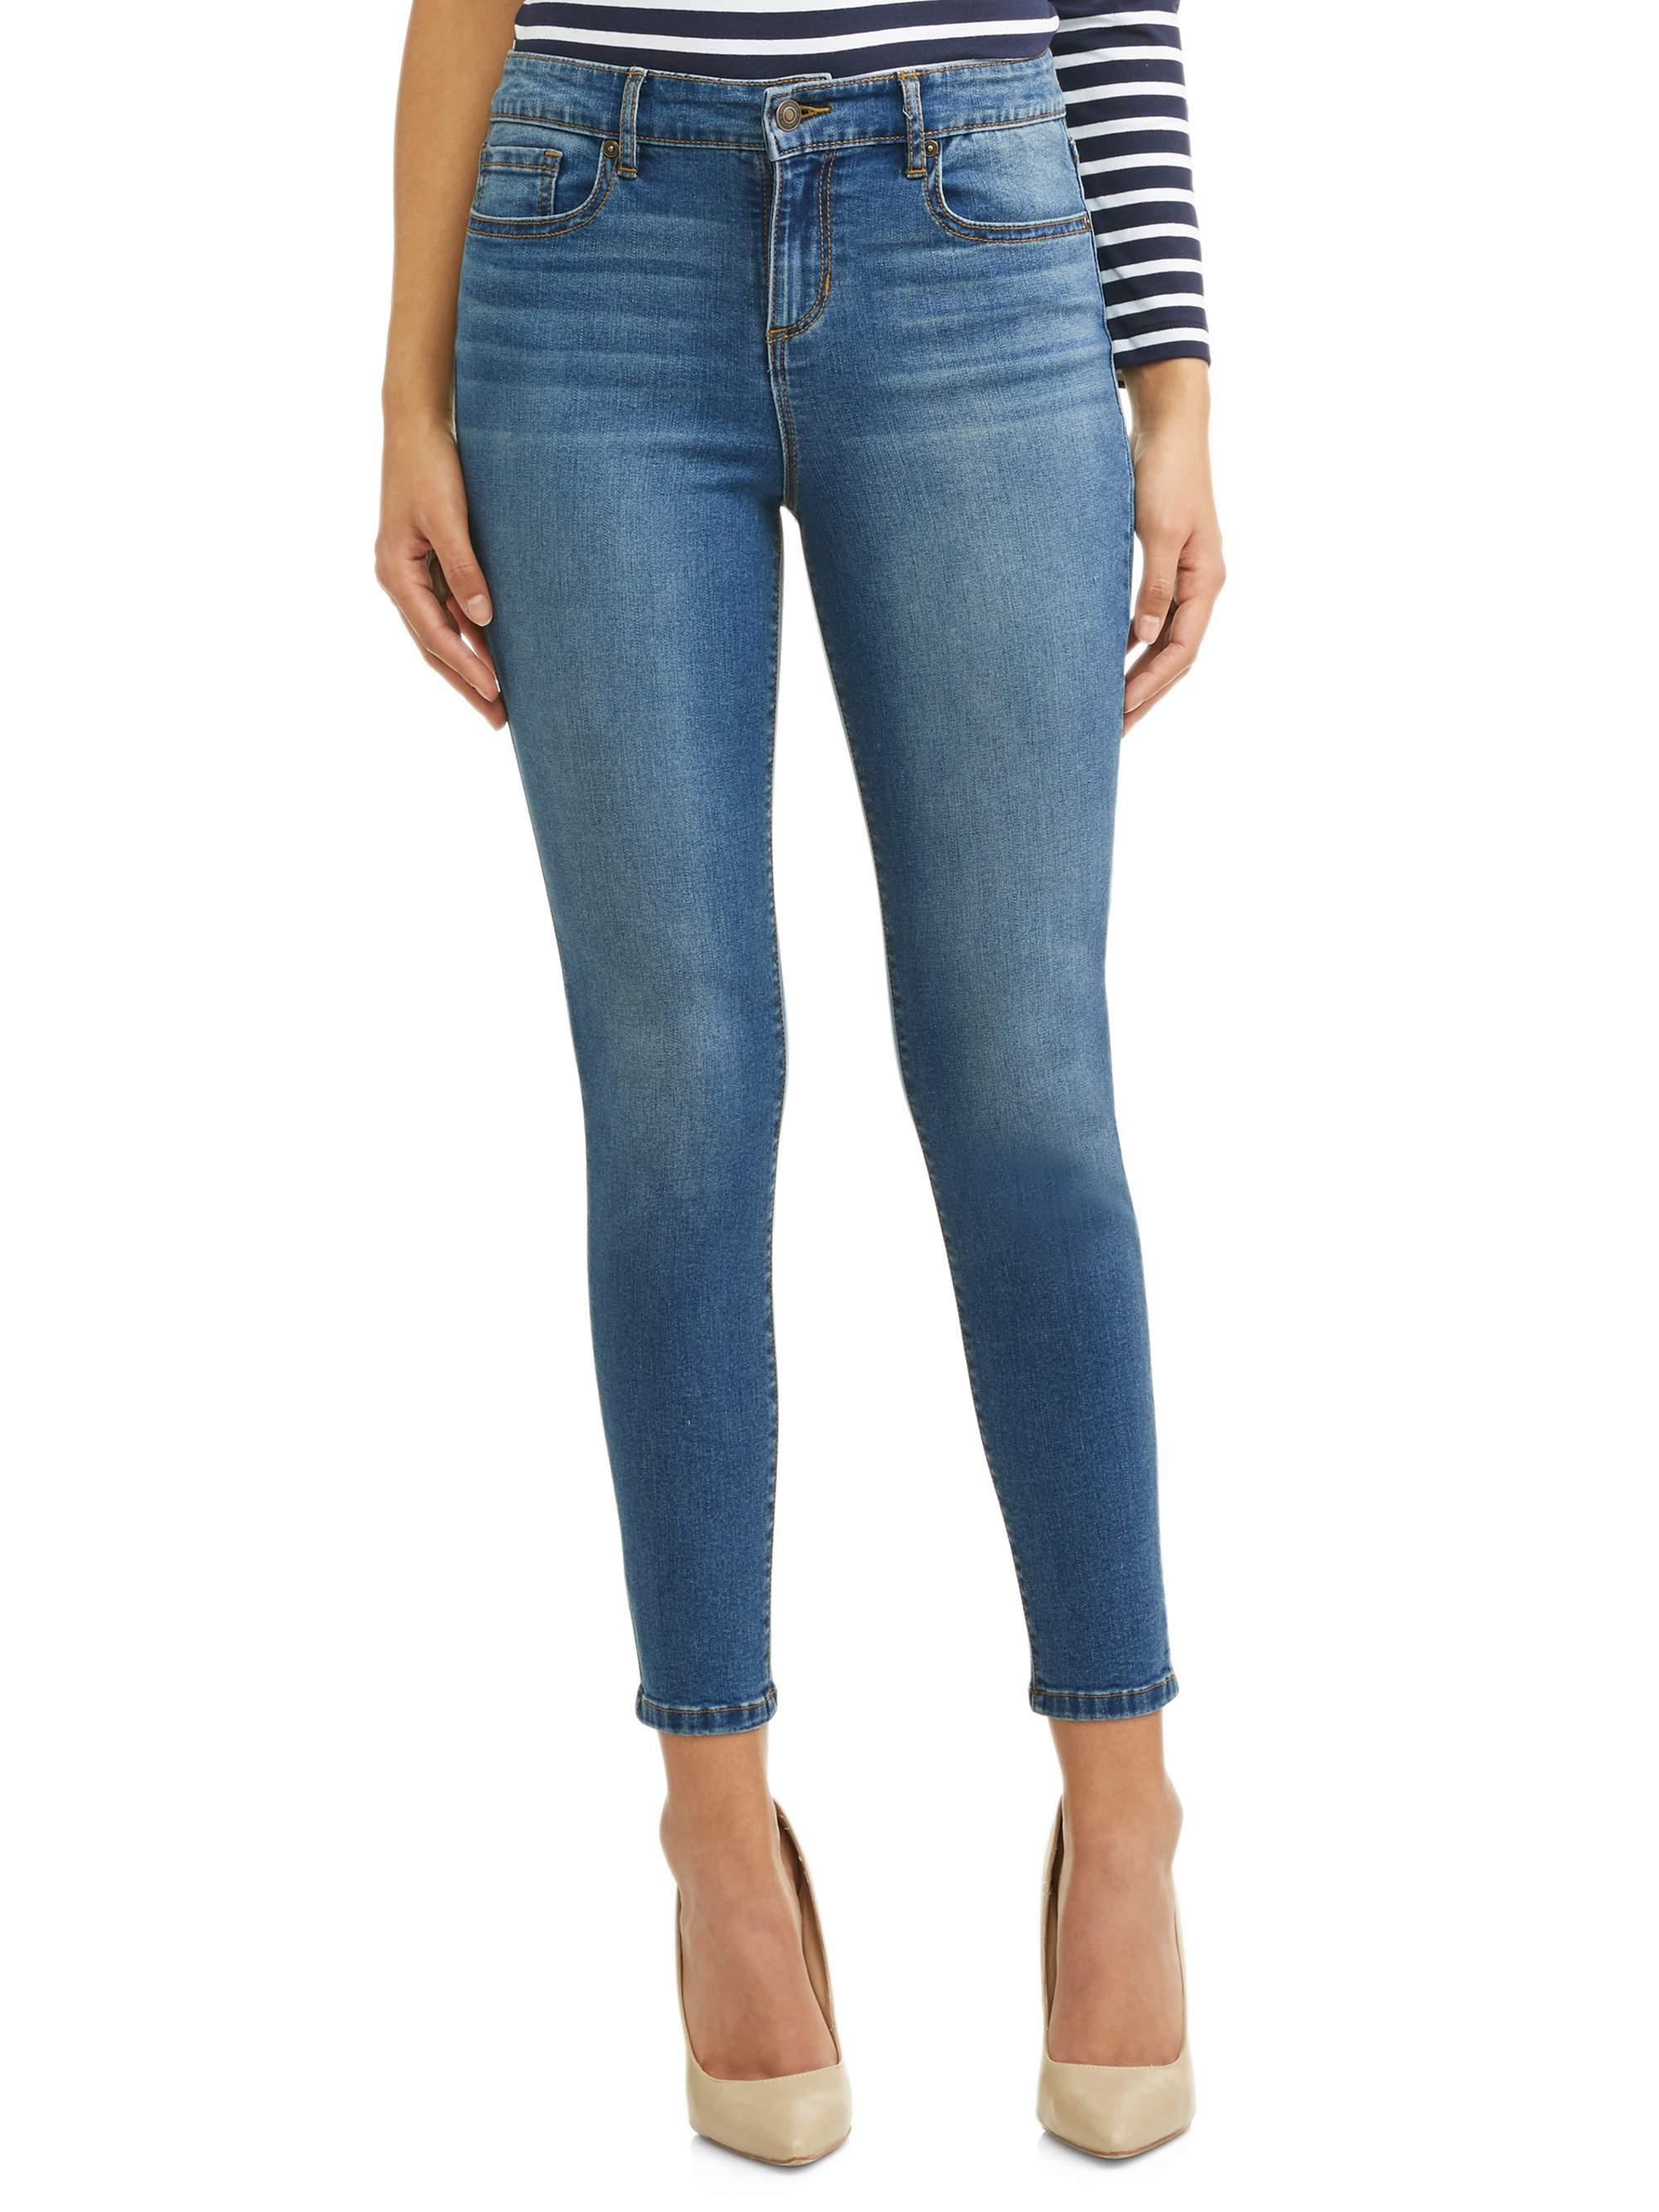 Sofia Vergara Jeans at Walmart Are So Affordable & Size Inclusive